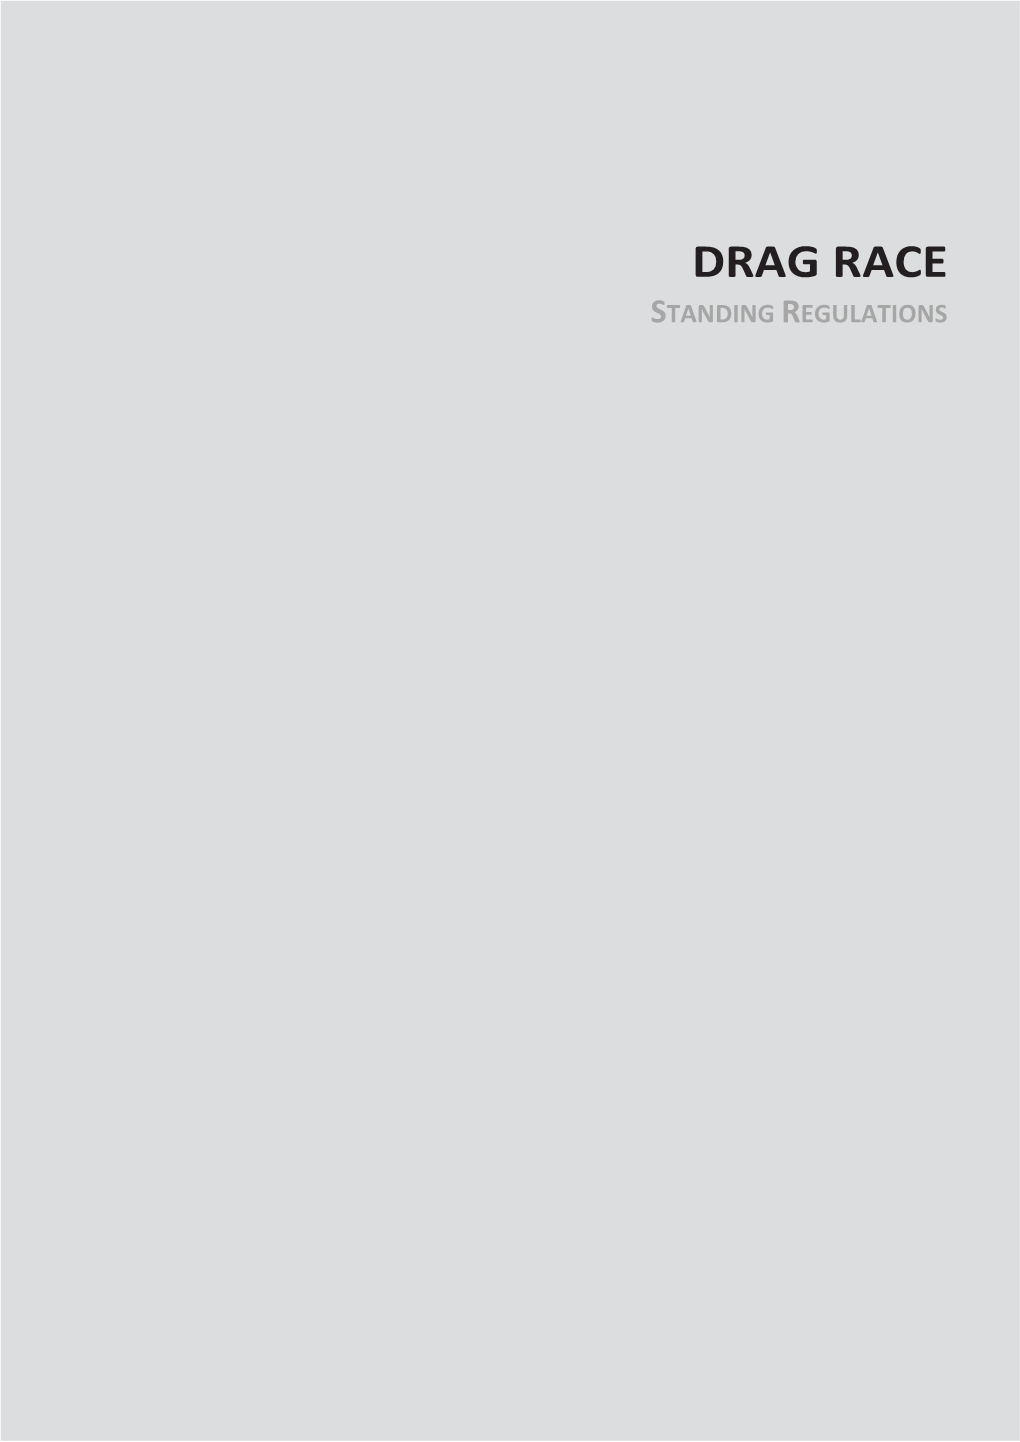 Drag Race Standing Regulations 2 ● Drag Racing Auto Cycle Union Handbook 2021